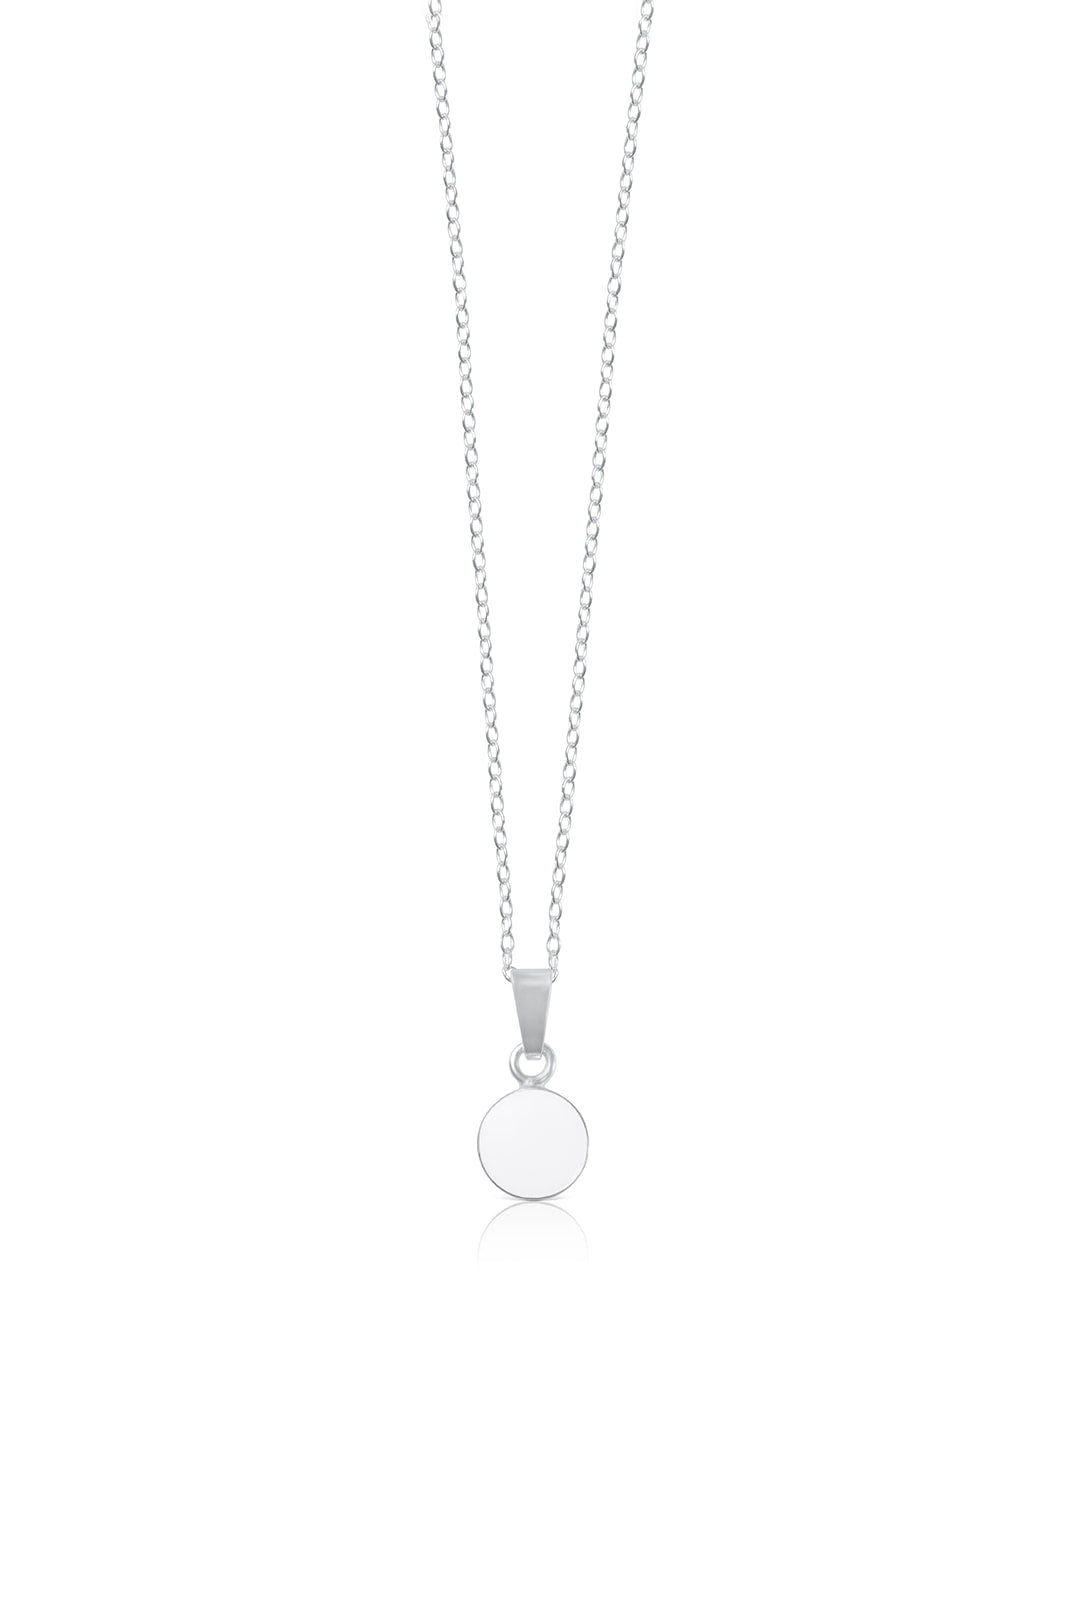 Simplicity Pendant Necklace - White Gold